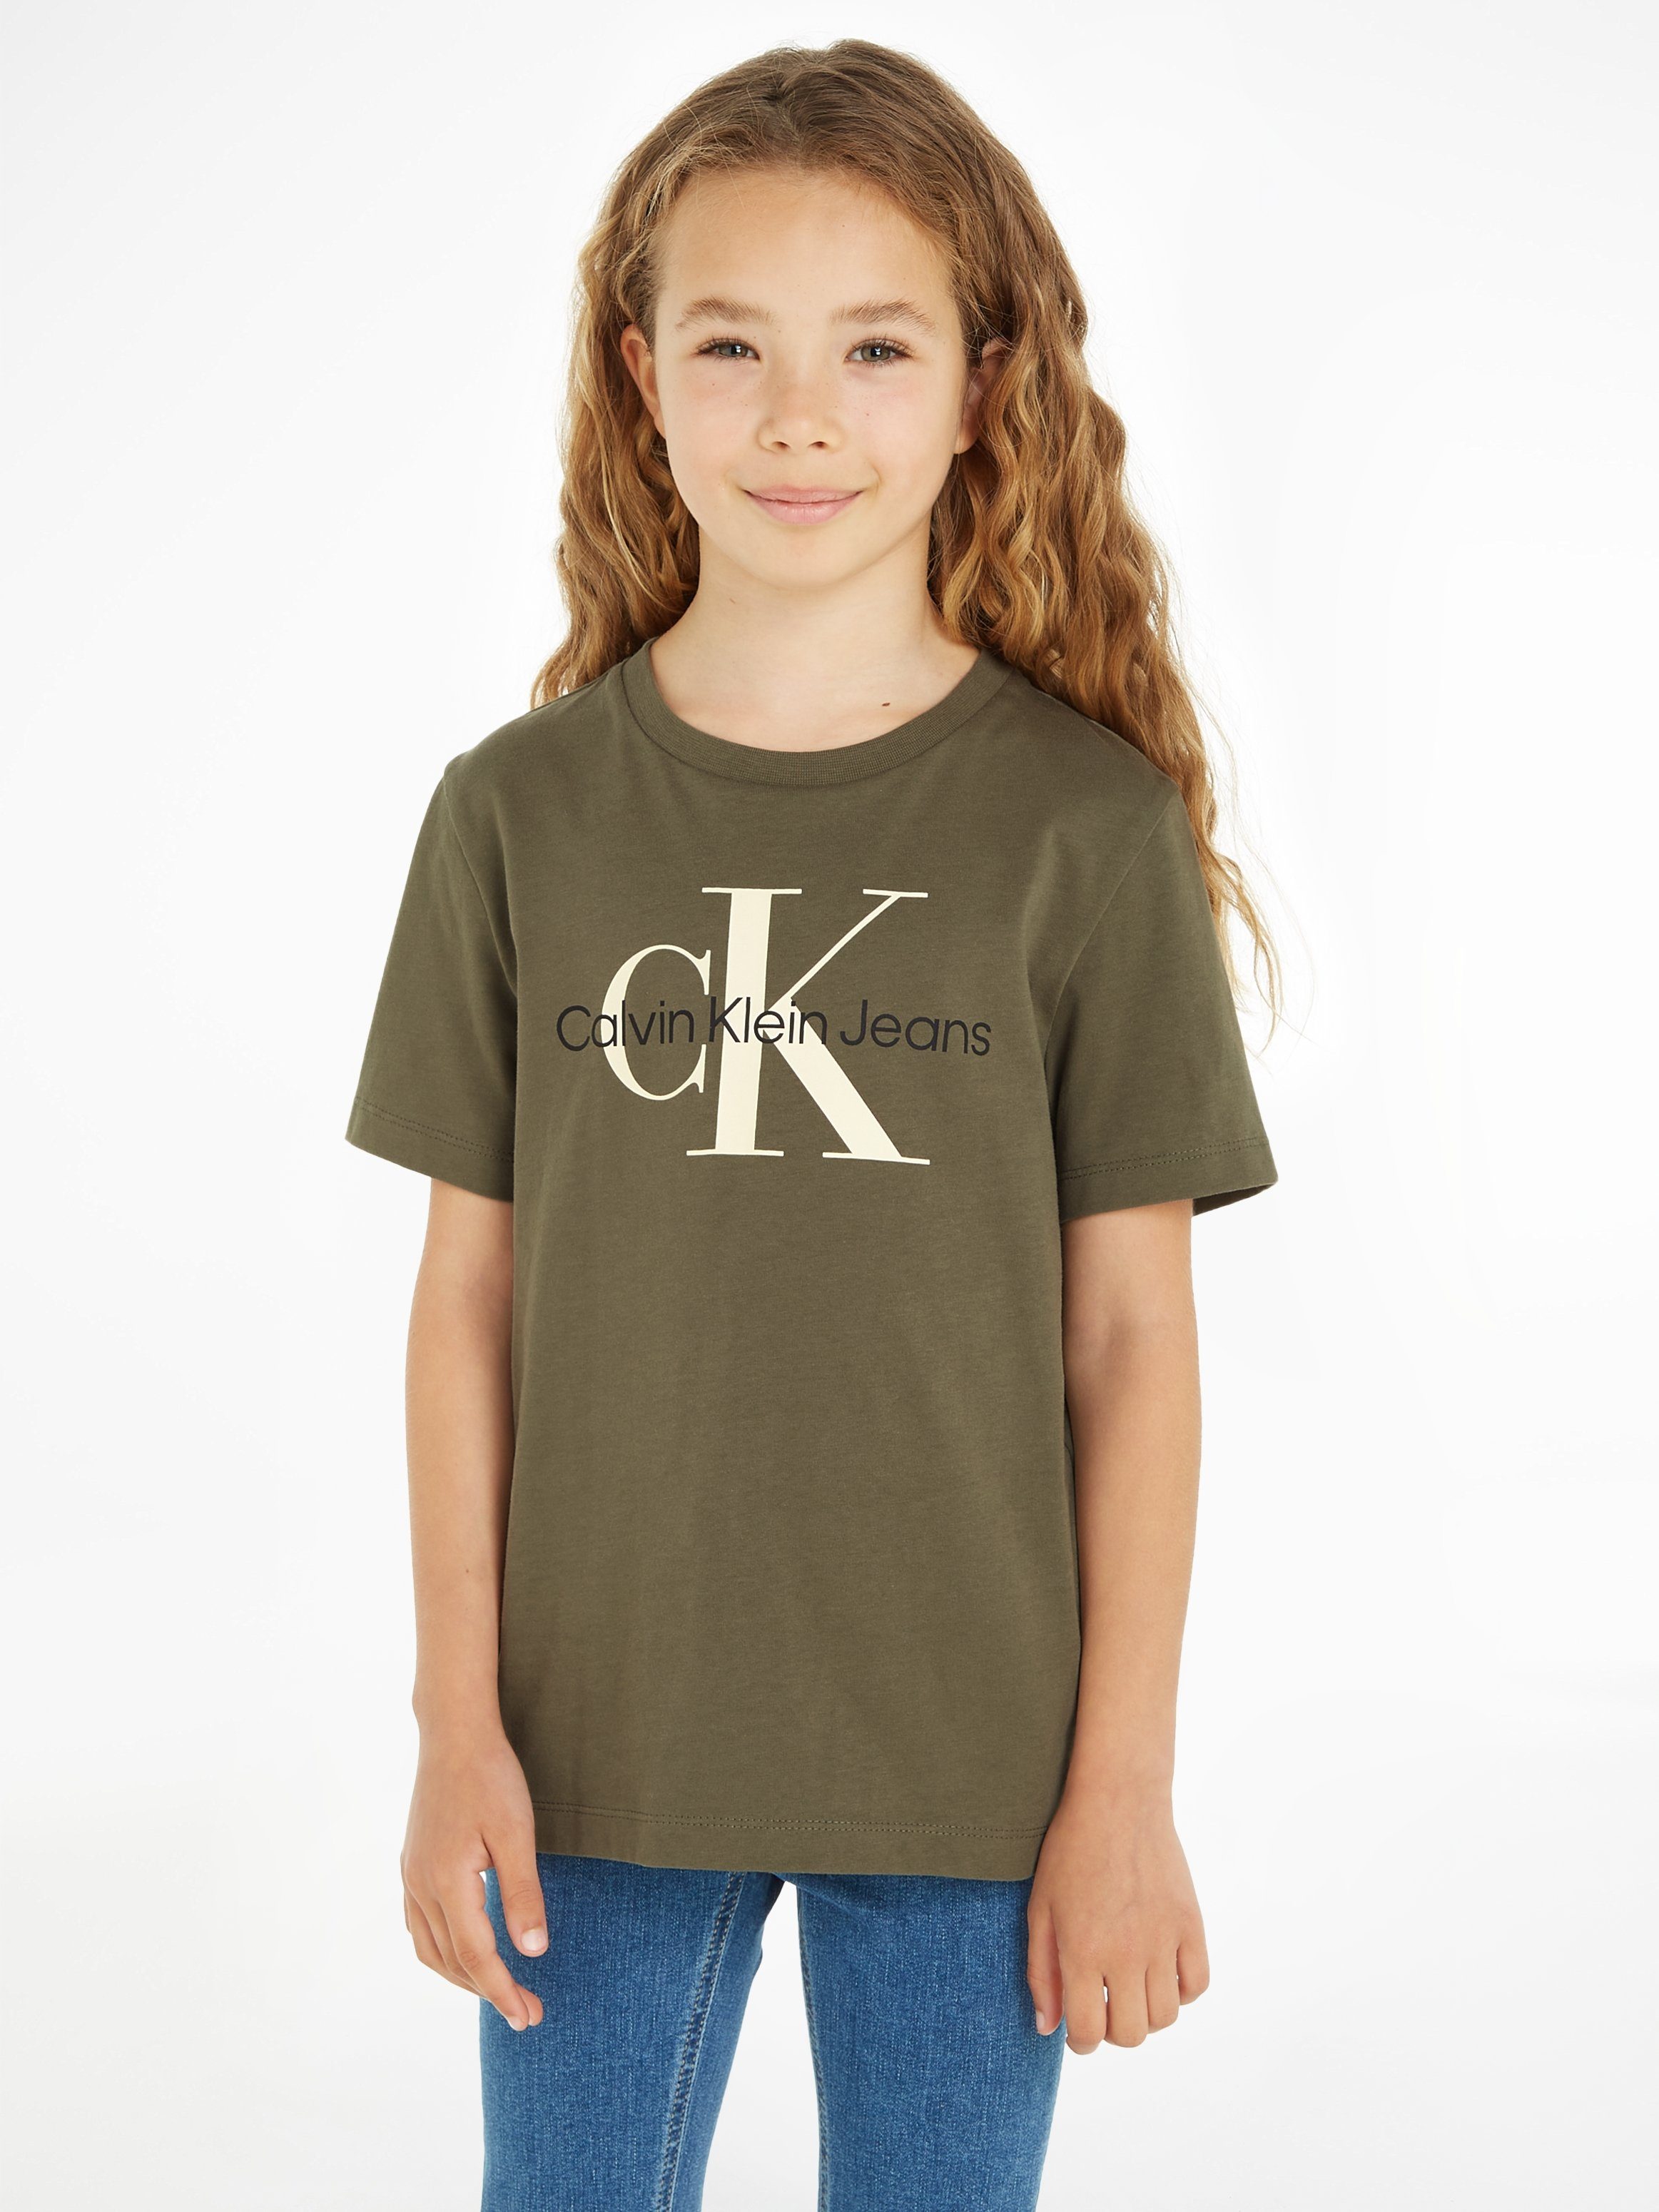 Calvin Klein SS MONOGRAM CK T-SHIRT Dusty Jeans Olive T-Shirt